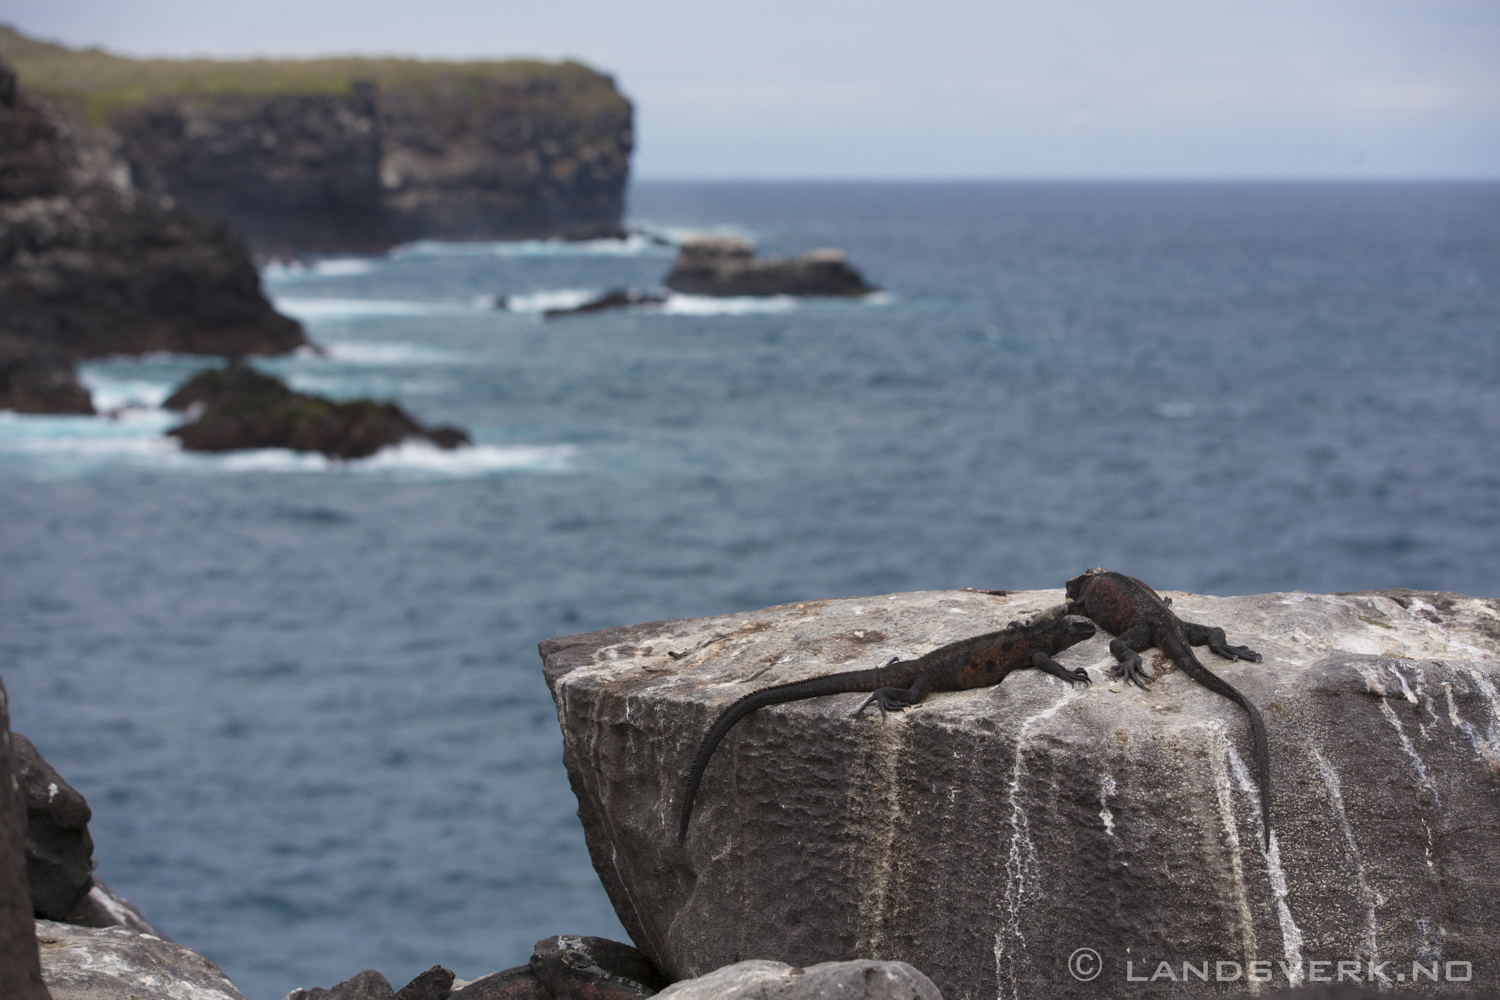 Wild Iguanas, Punta Suarez, Isla Espanola, Galapagos. 

(Canon EOS 5D Mark III / Canon EF 70-200mm f/2.8 L IS II USM)